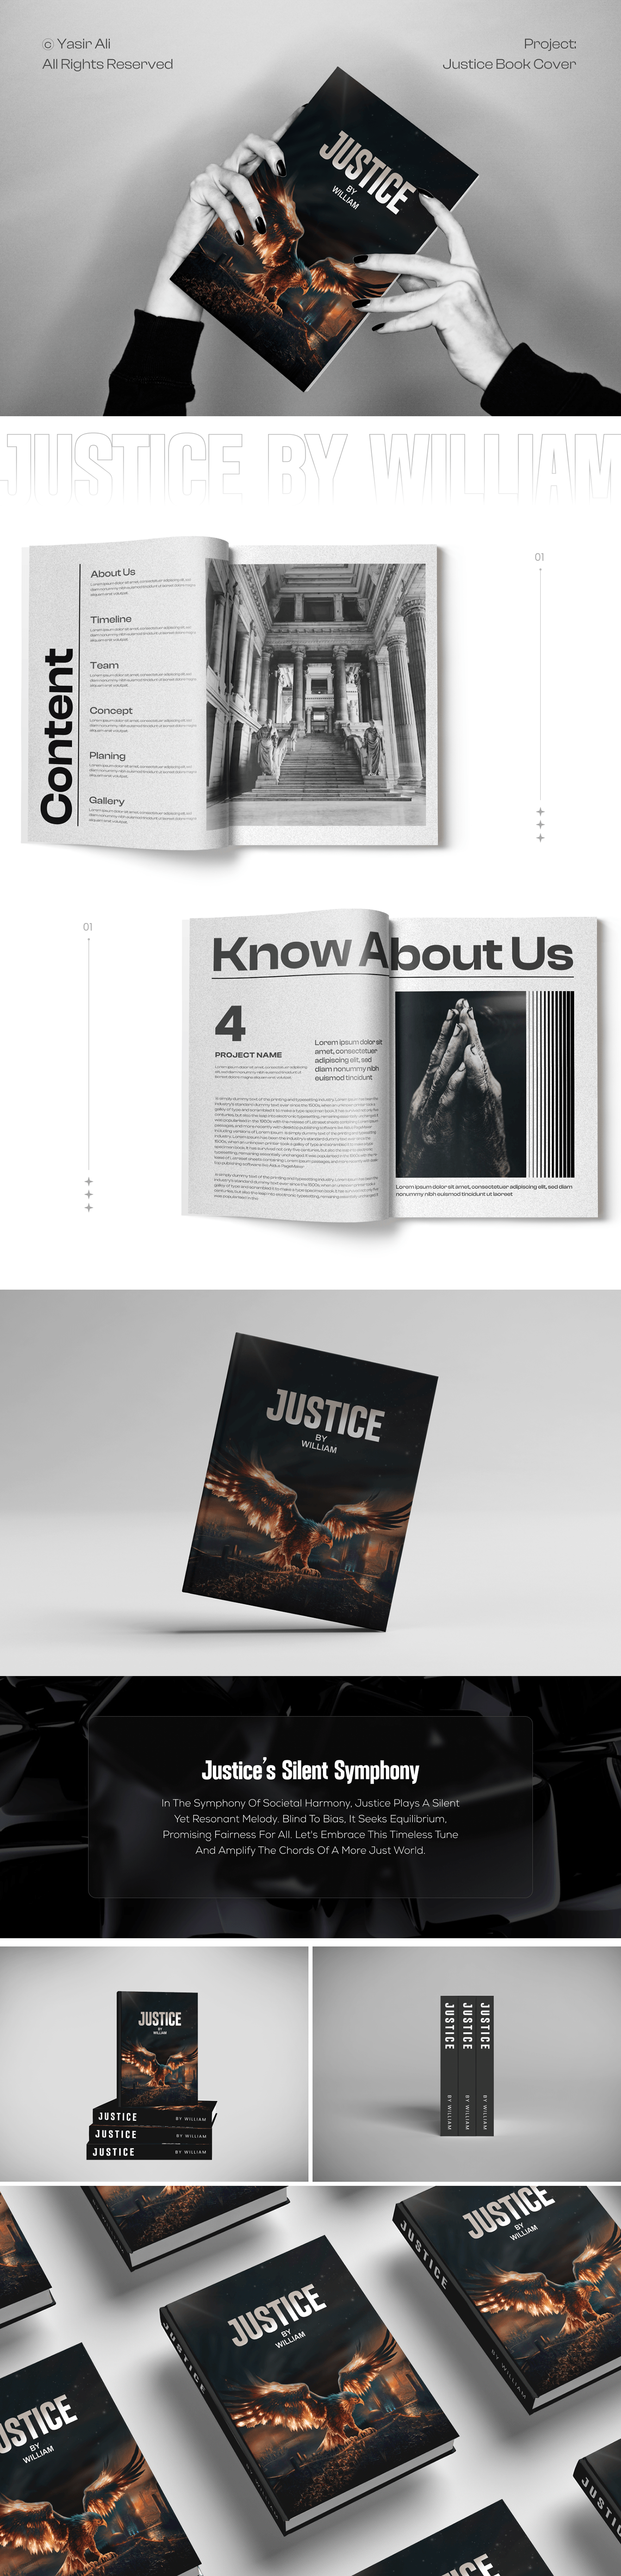 book cover designing Book Cover Design reading book Justice identity brand book design